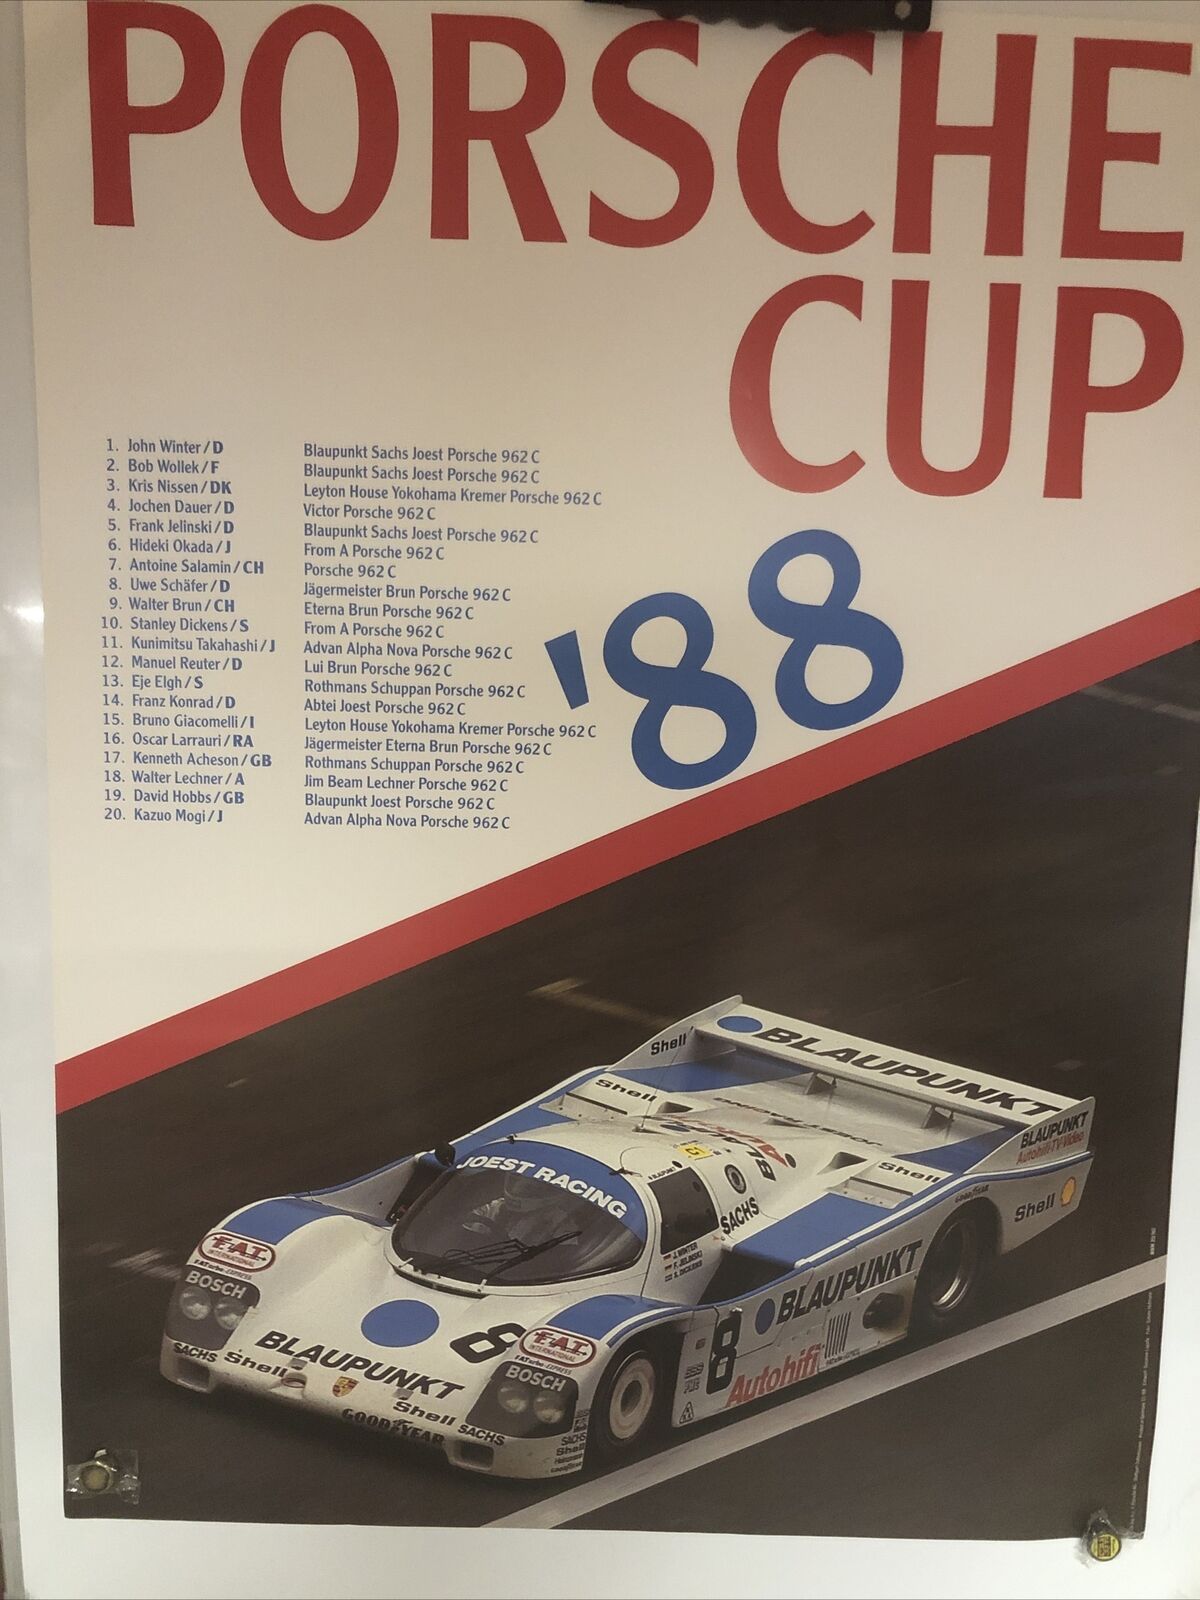 AWESOME ORIGINAL 1988 Porsche 962 Porsche Cup Victory Showroom Poster 